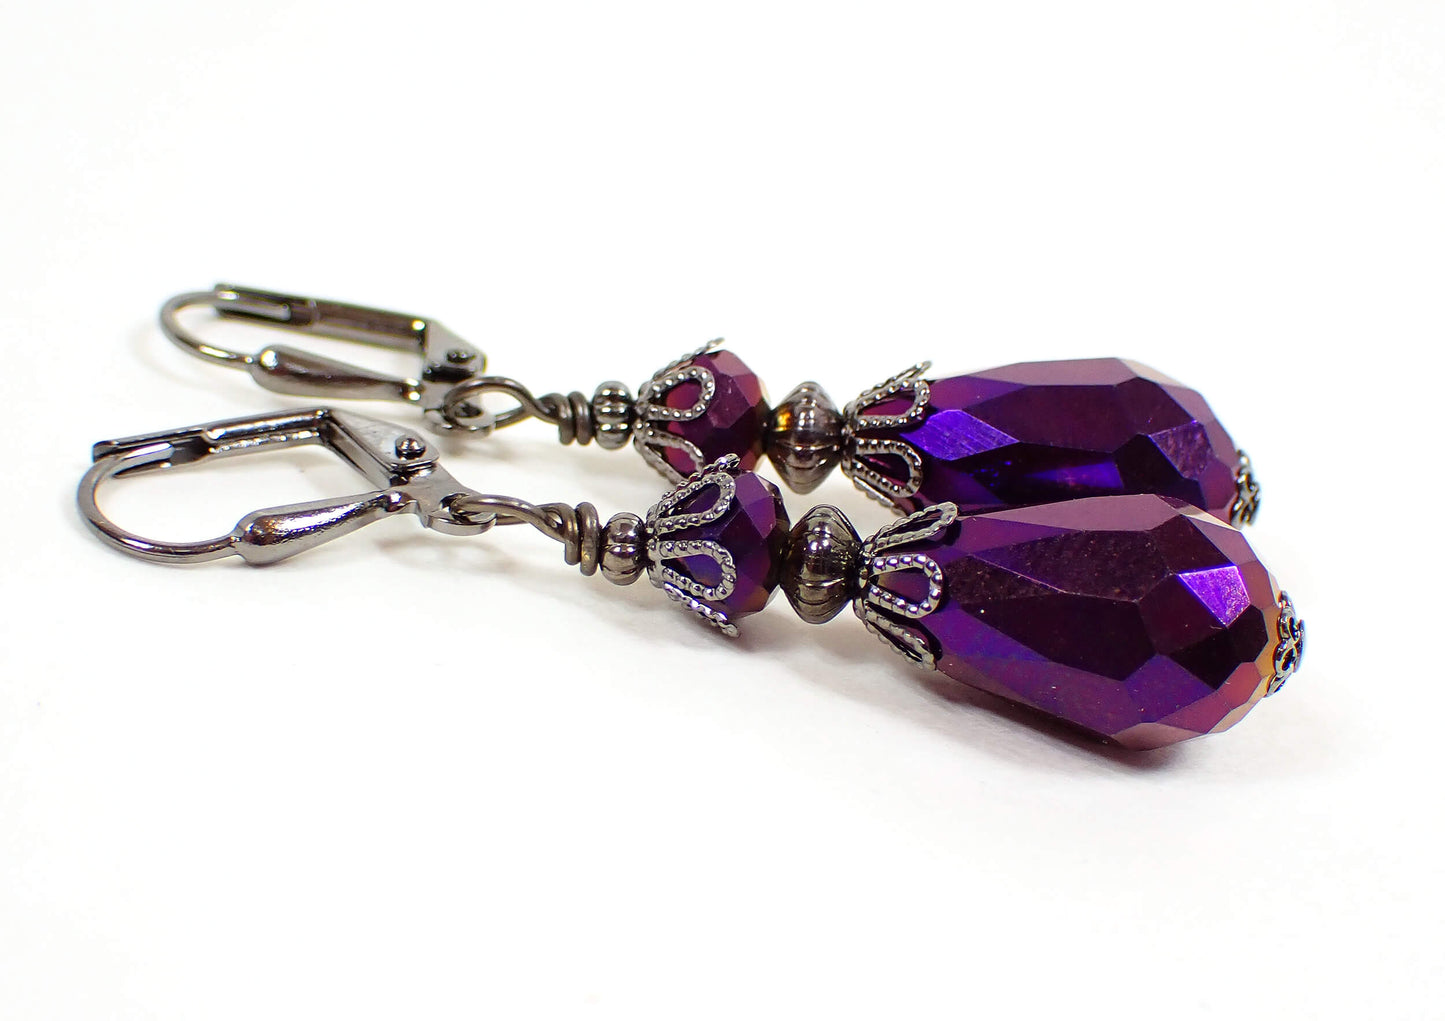 Handmade Metallic Purple Teardrop Earrings Gunmetal Hook Lever Back or Clip On